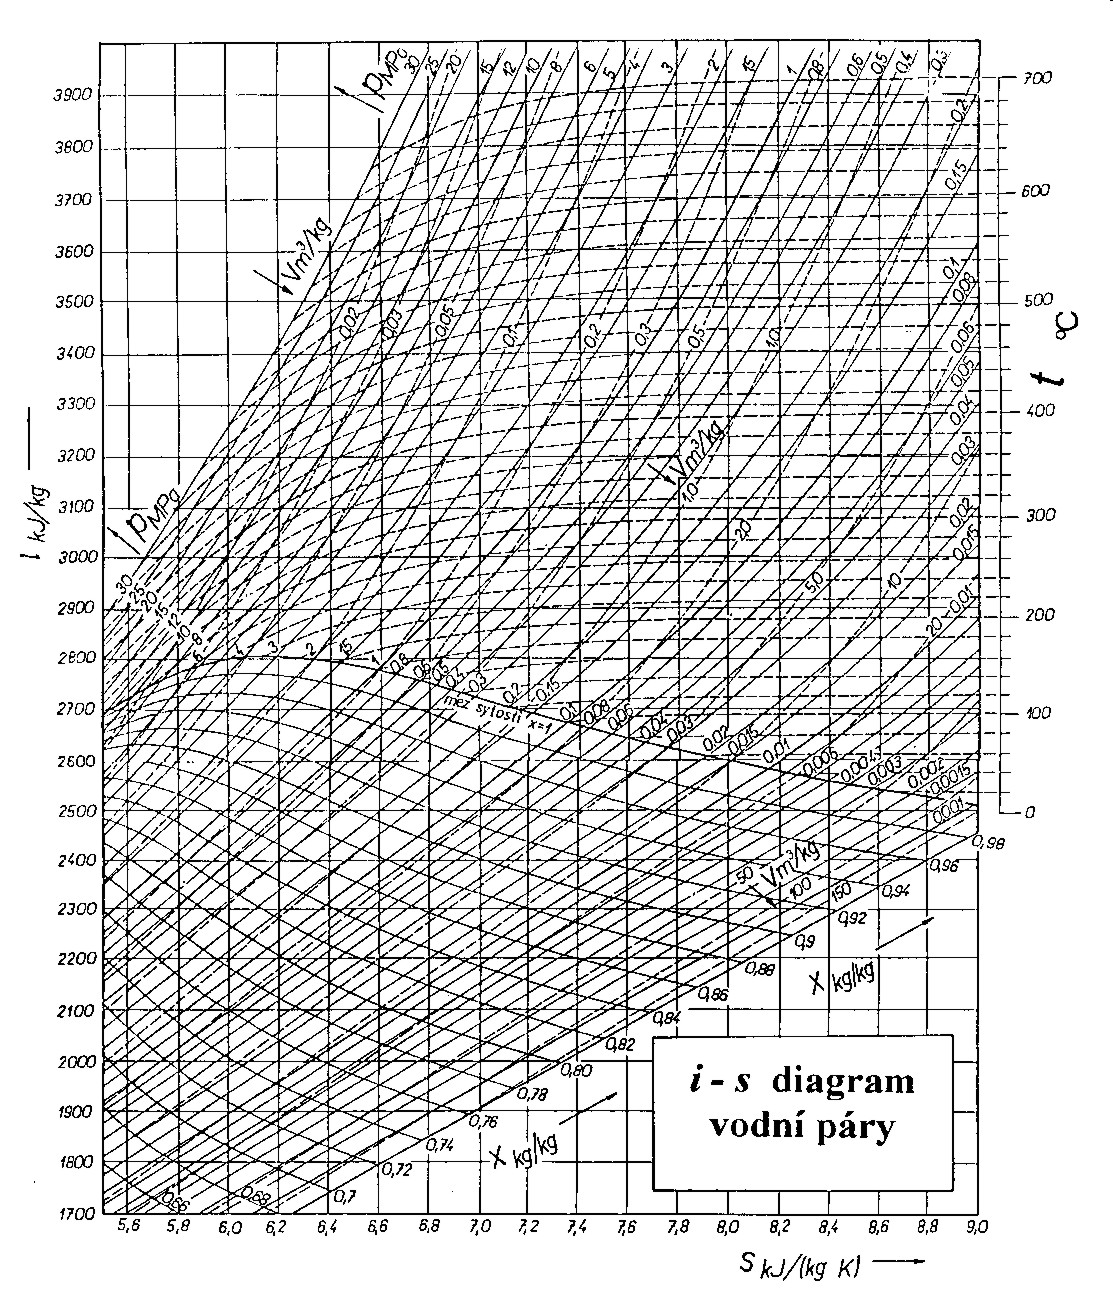 Калькулятор hs диаграмма - 95 фото